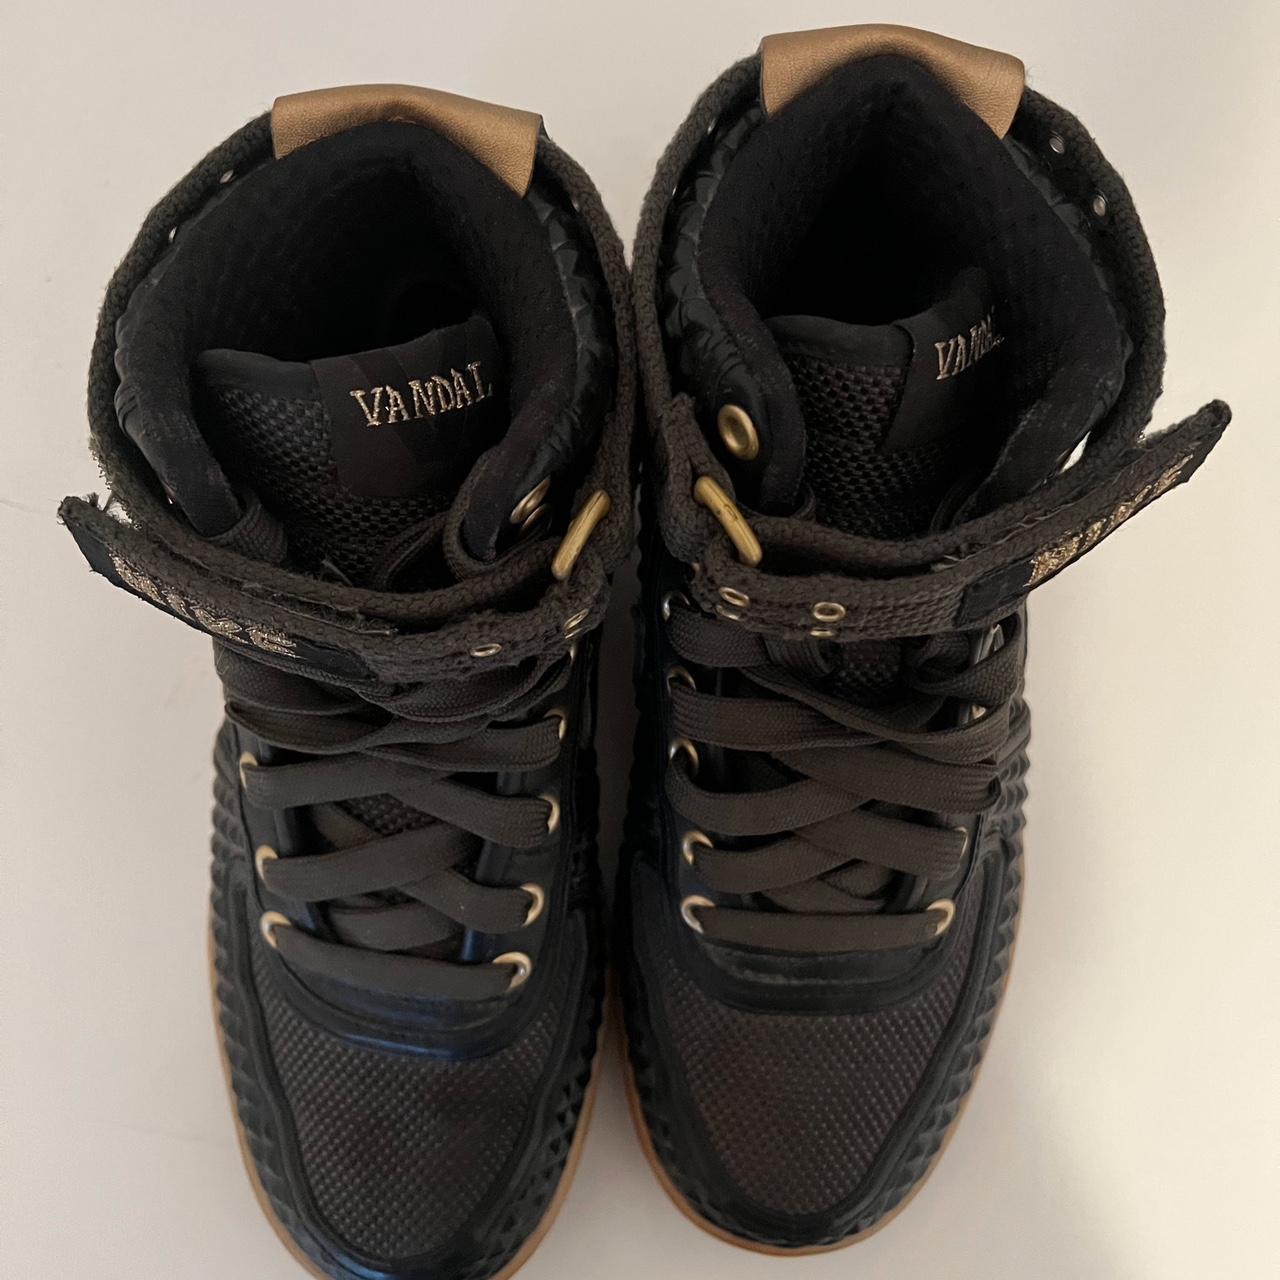 Nike Vandal Supreme Rock and Roll High Top Sneaker... - Depop